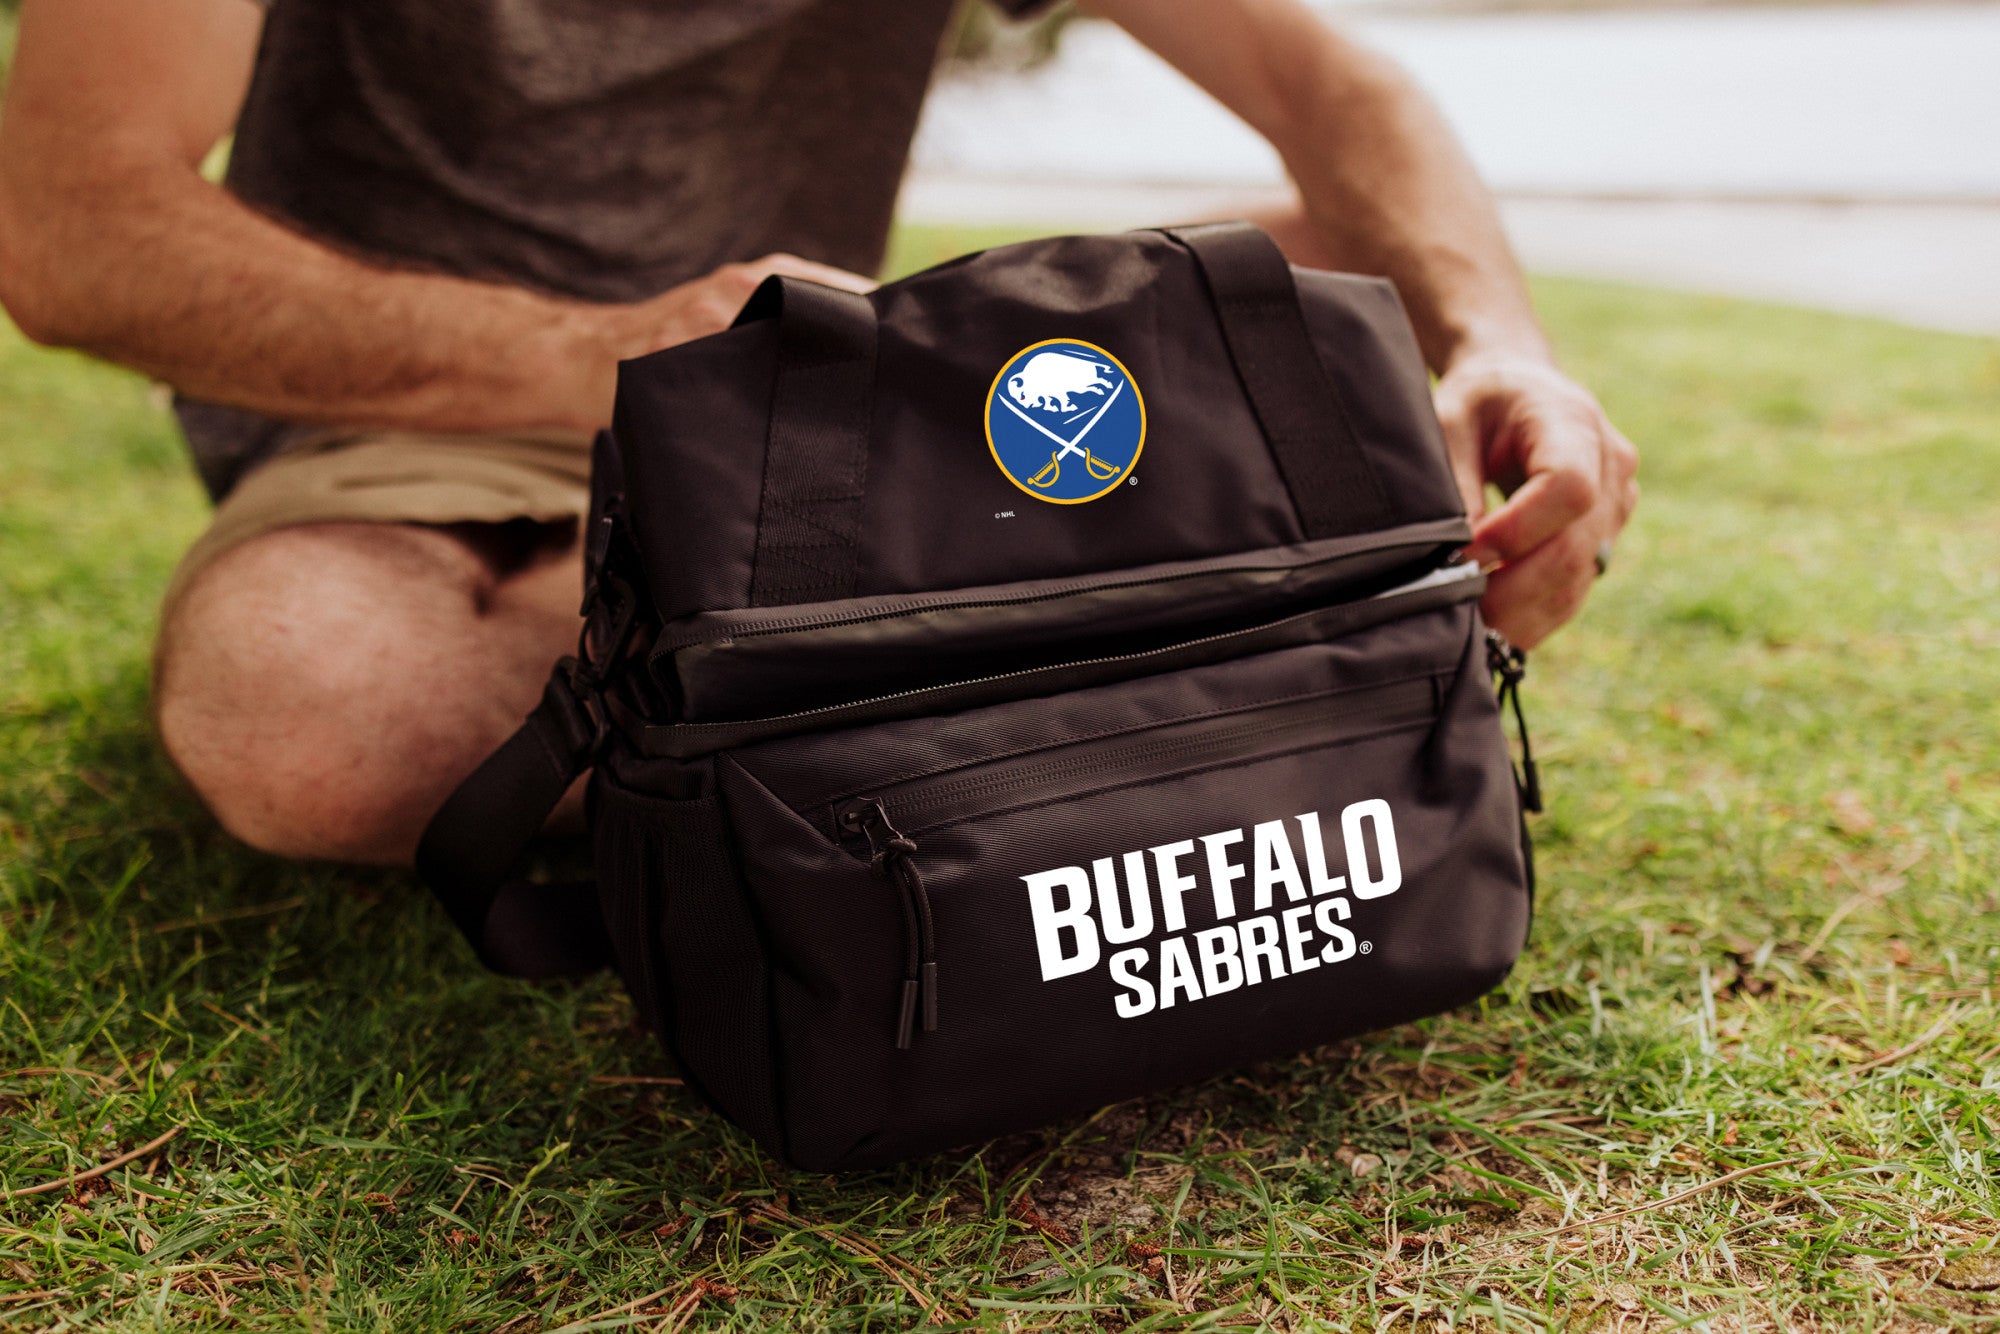 Buffalo Sabres - Tarana Lunch Bag Cooler with Utensils